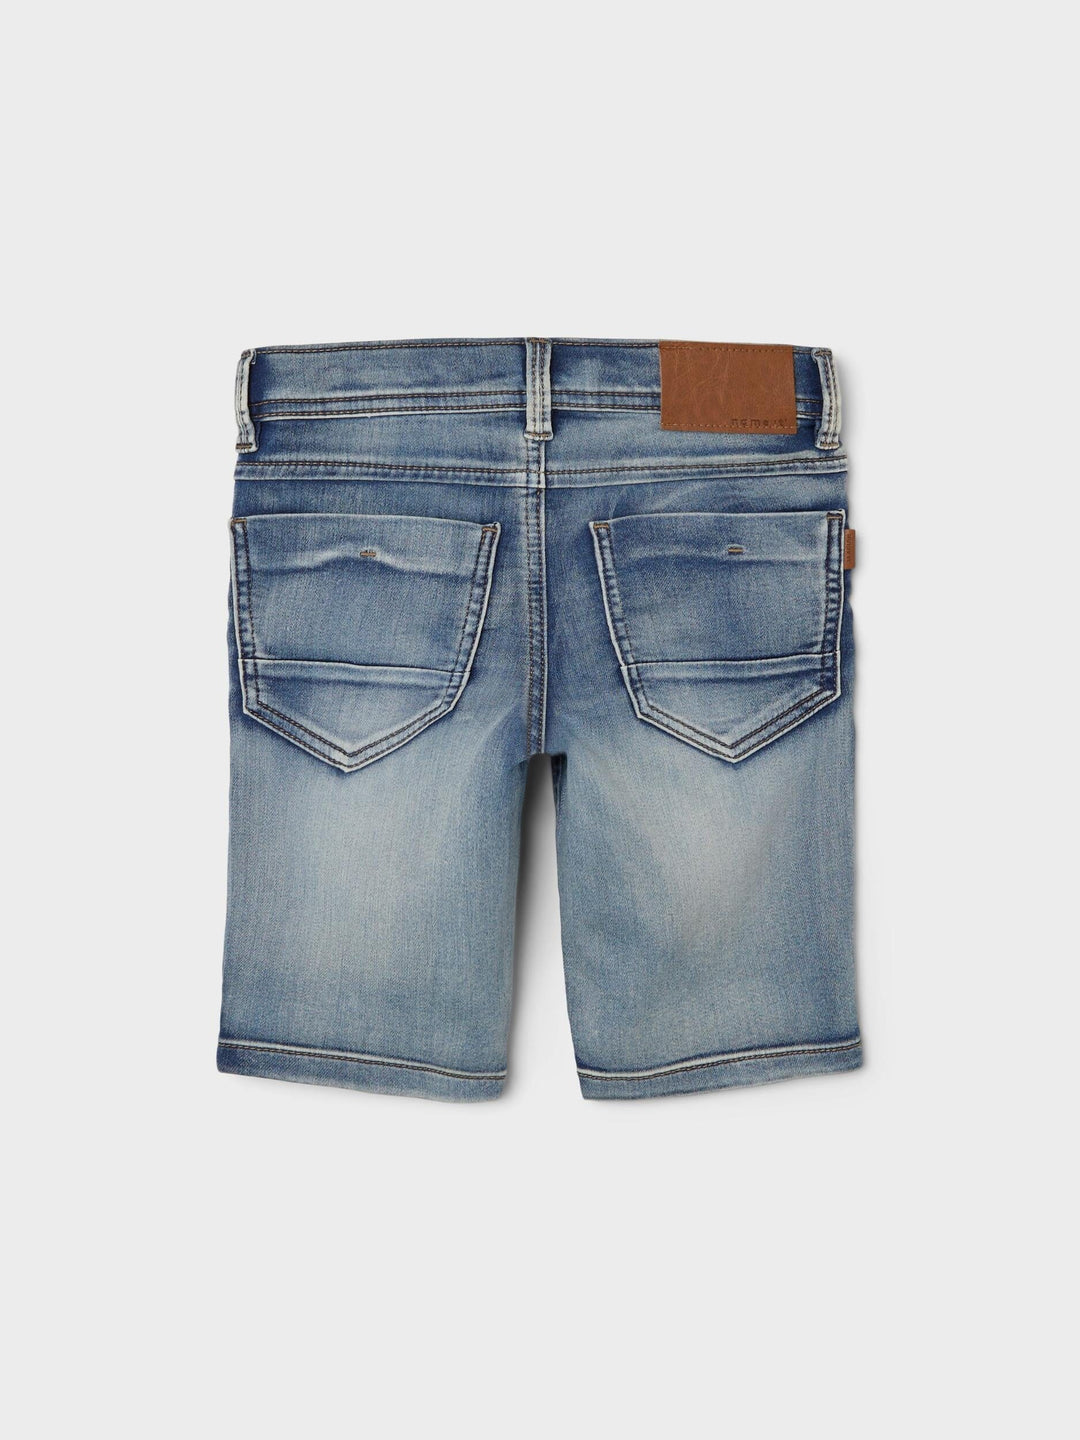 Name It - Nkmtheo L Shorts 5495-Th - 3752205 Medium Blue Denim Shorts 